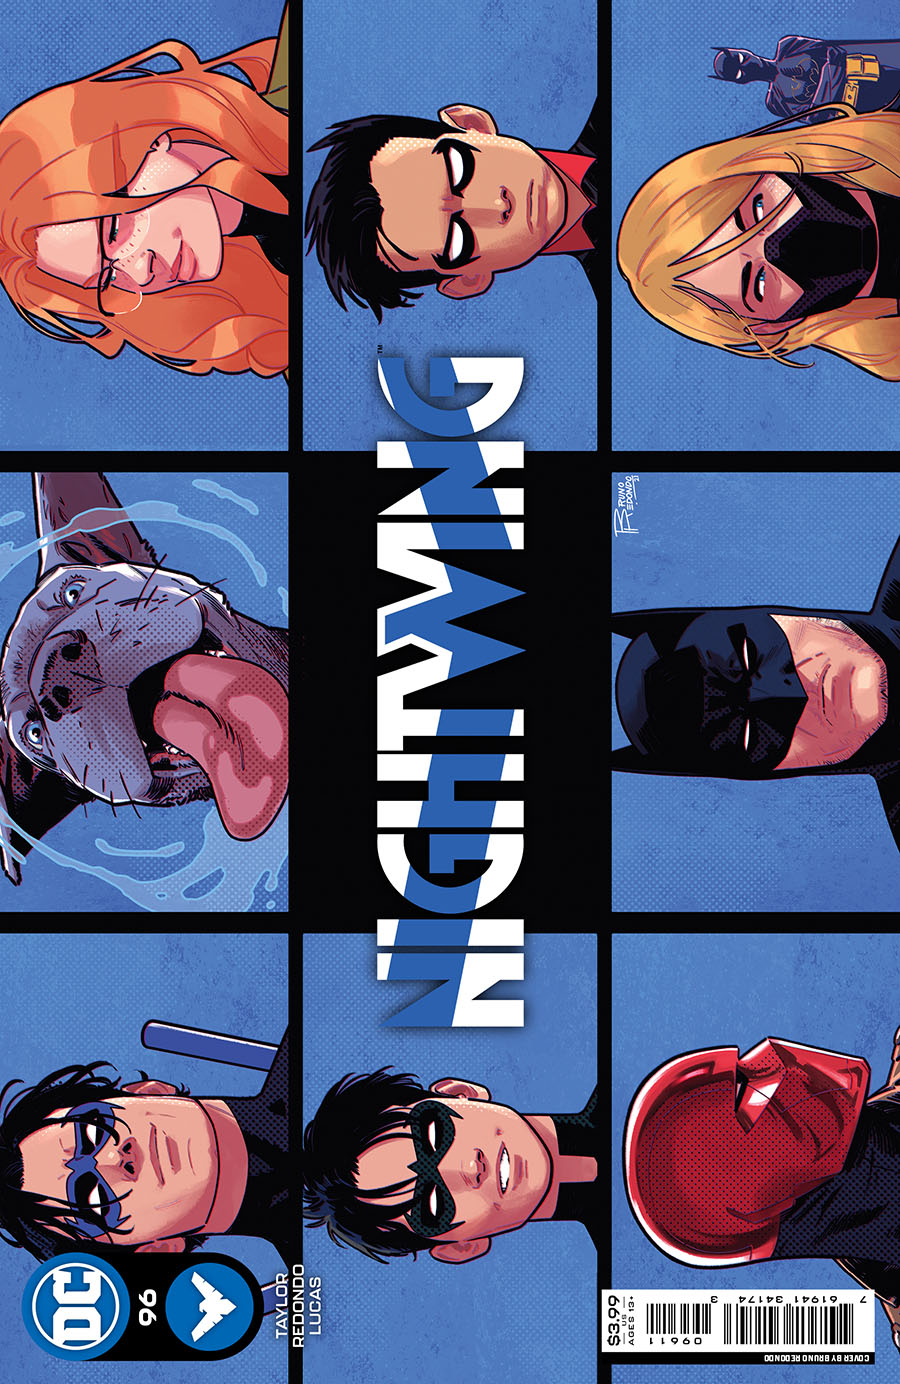 Nightwing Vol 4 #96 Cover A Regular Bruno Redondo Cover